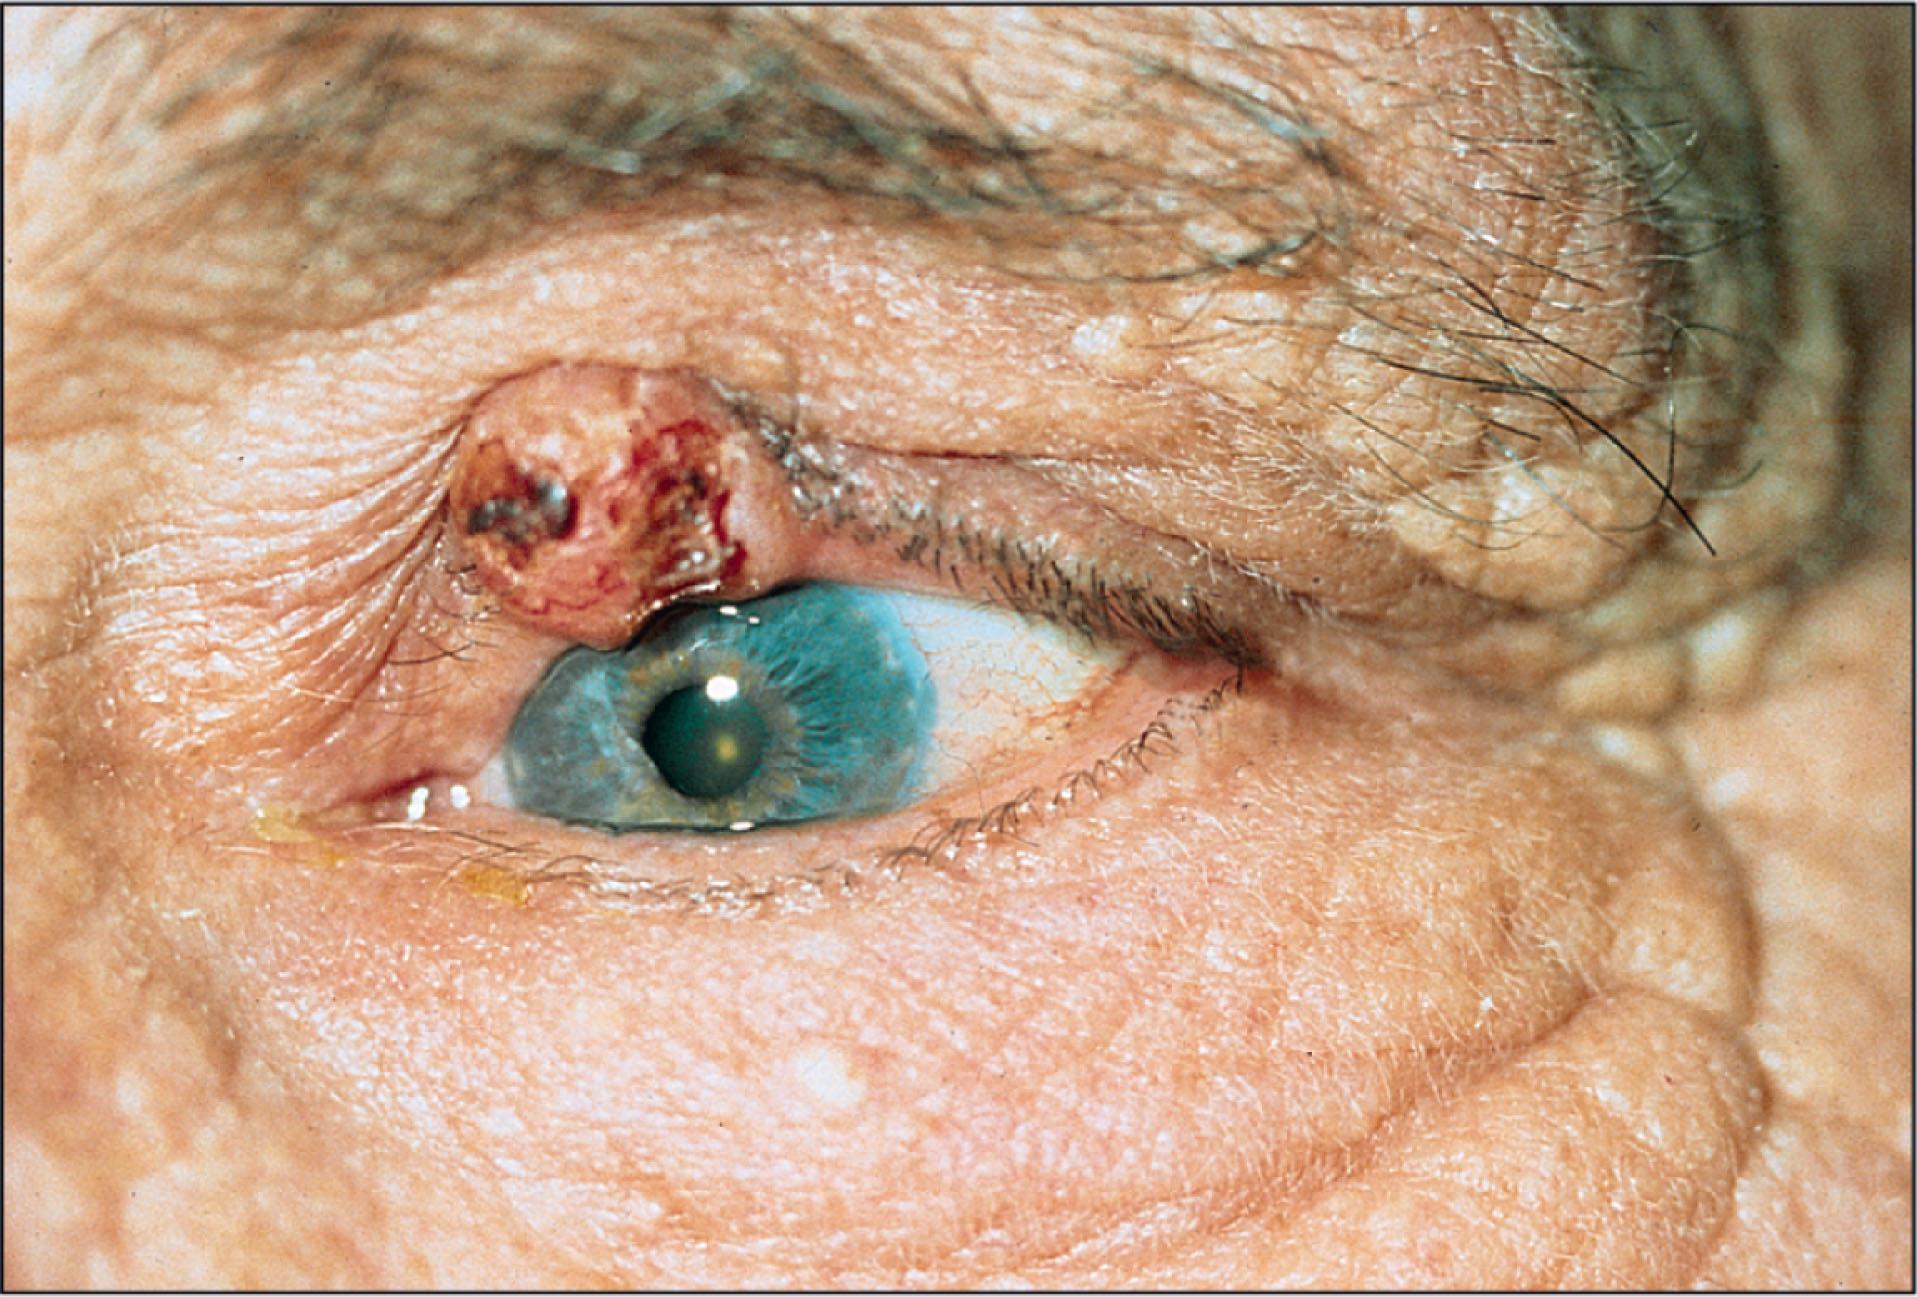 Fig. 12.8.1, Nodular Basal Cell Carcinoma (BCC) of the Eyelid.